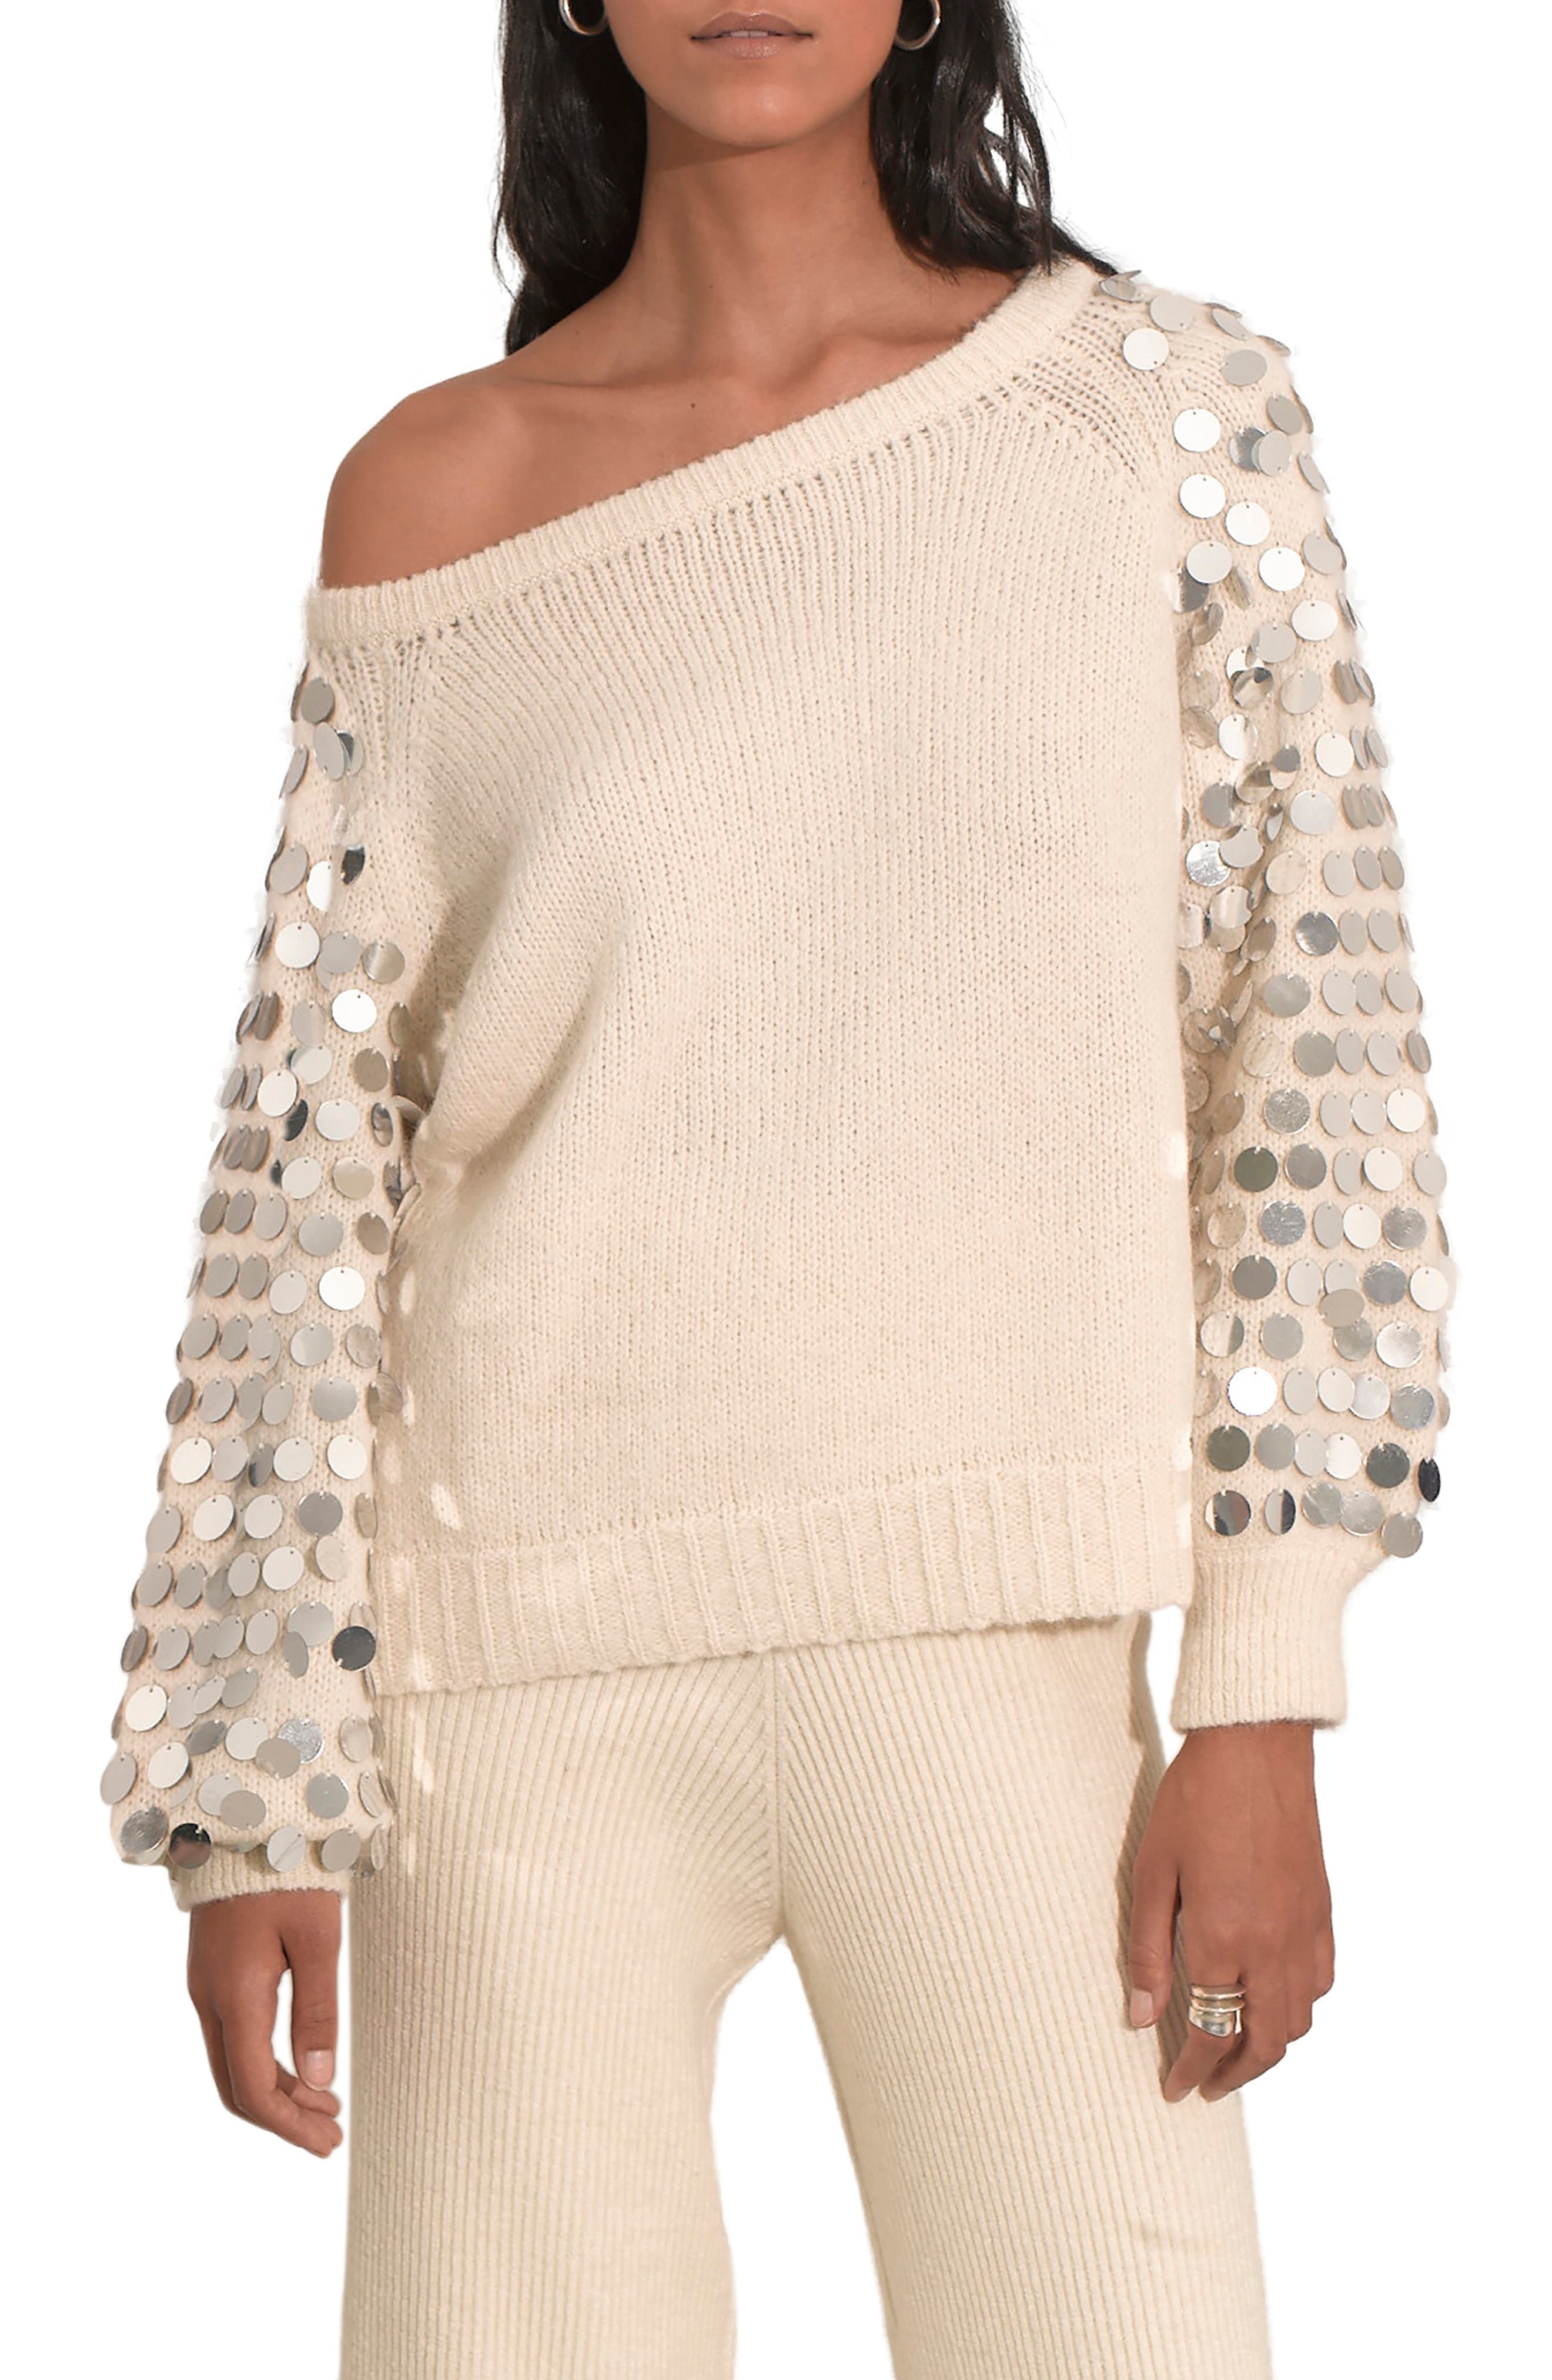 Eleven Six Sadie Embellished Baby Alpaca Blend One Shoulder Sweater in Ivory W/Silver Sequins at Nordstrom